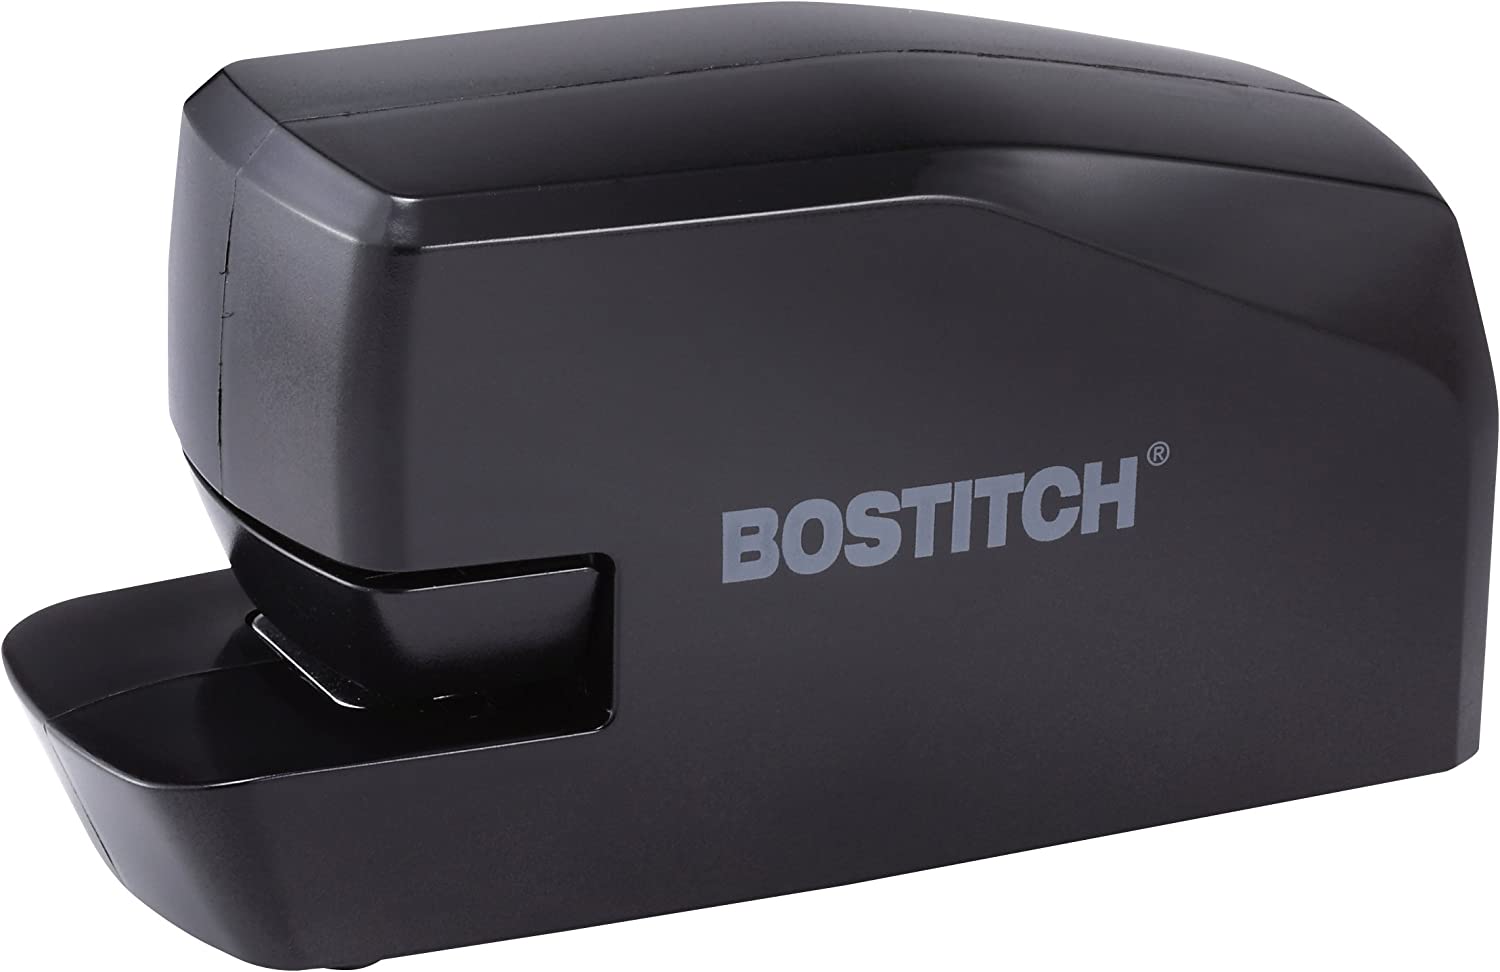 Bostitch Portable Electric Stapler